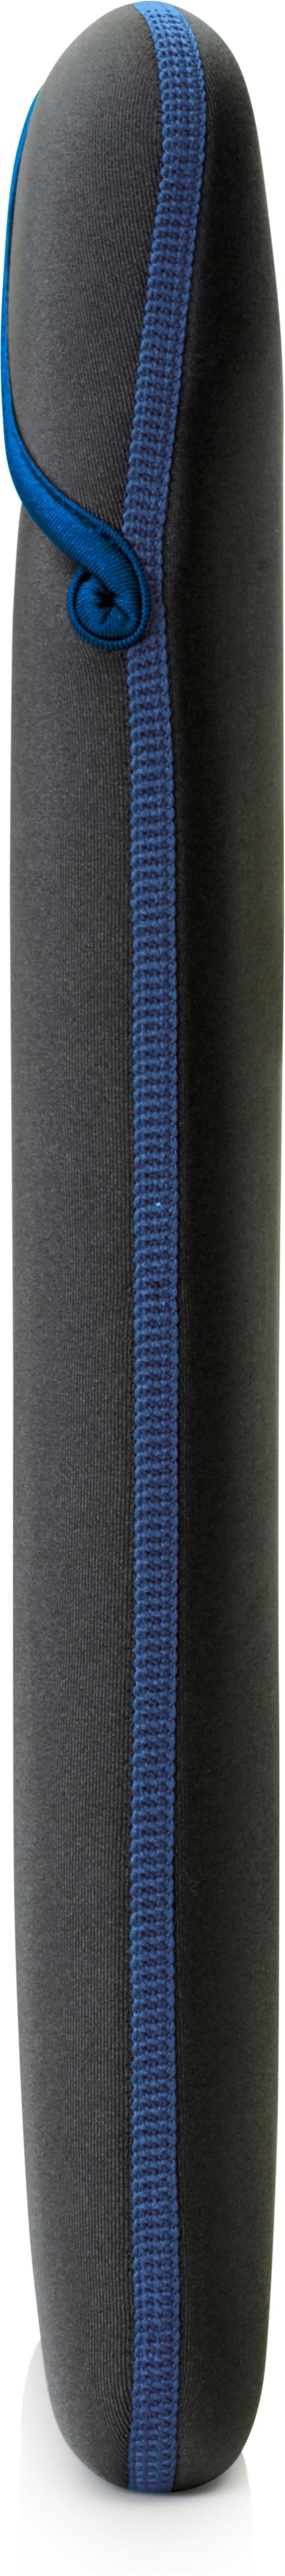 HP omkeerbare beschermende 14,1-inch blauwe laptophoes